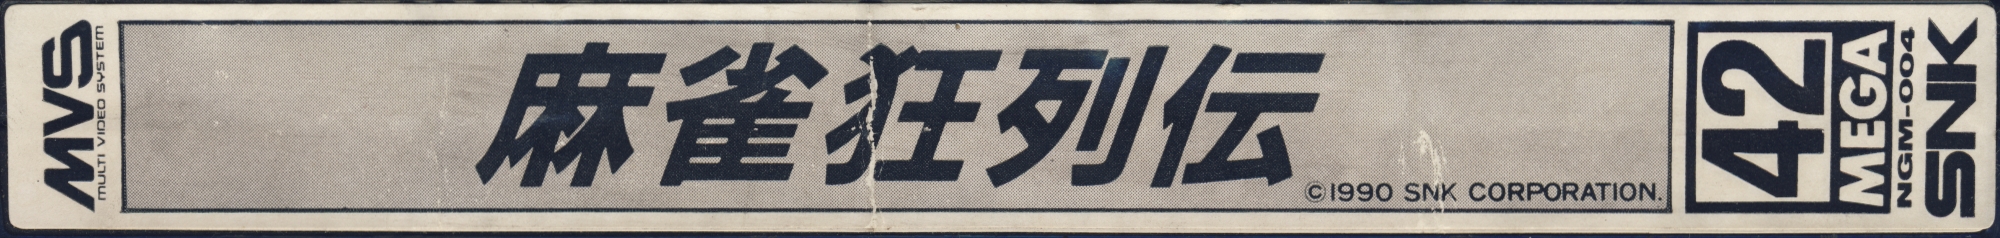 Mahjong kyoretsuden jp label.jpg